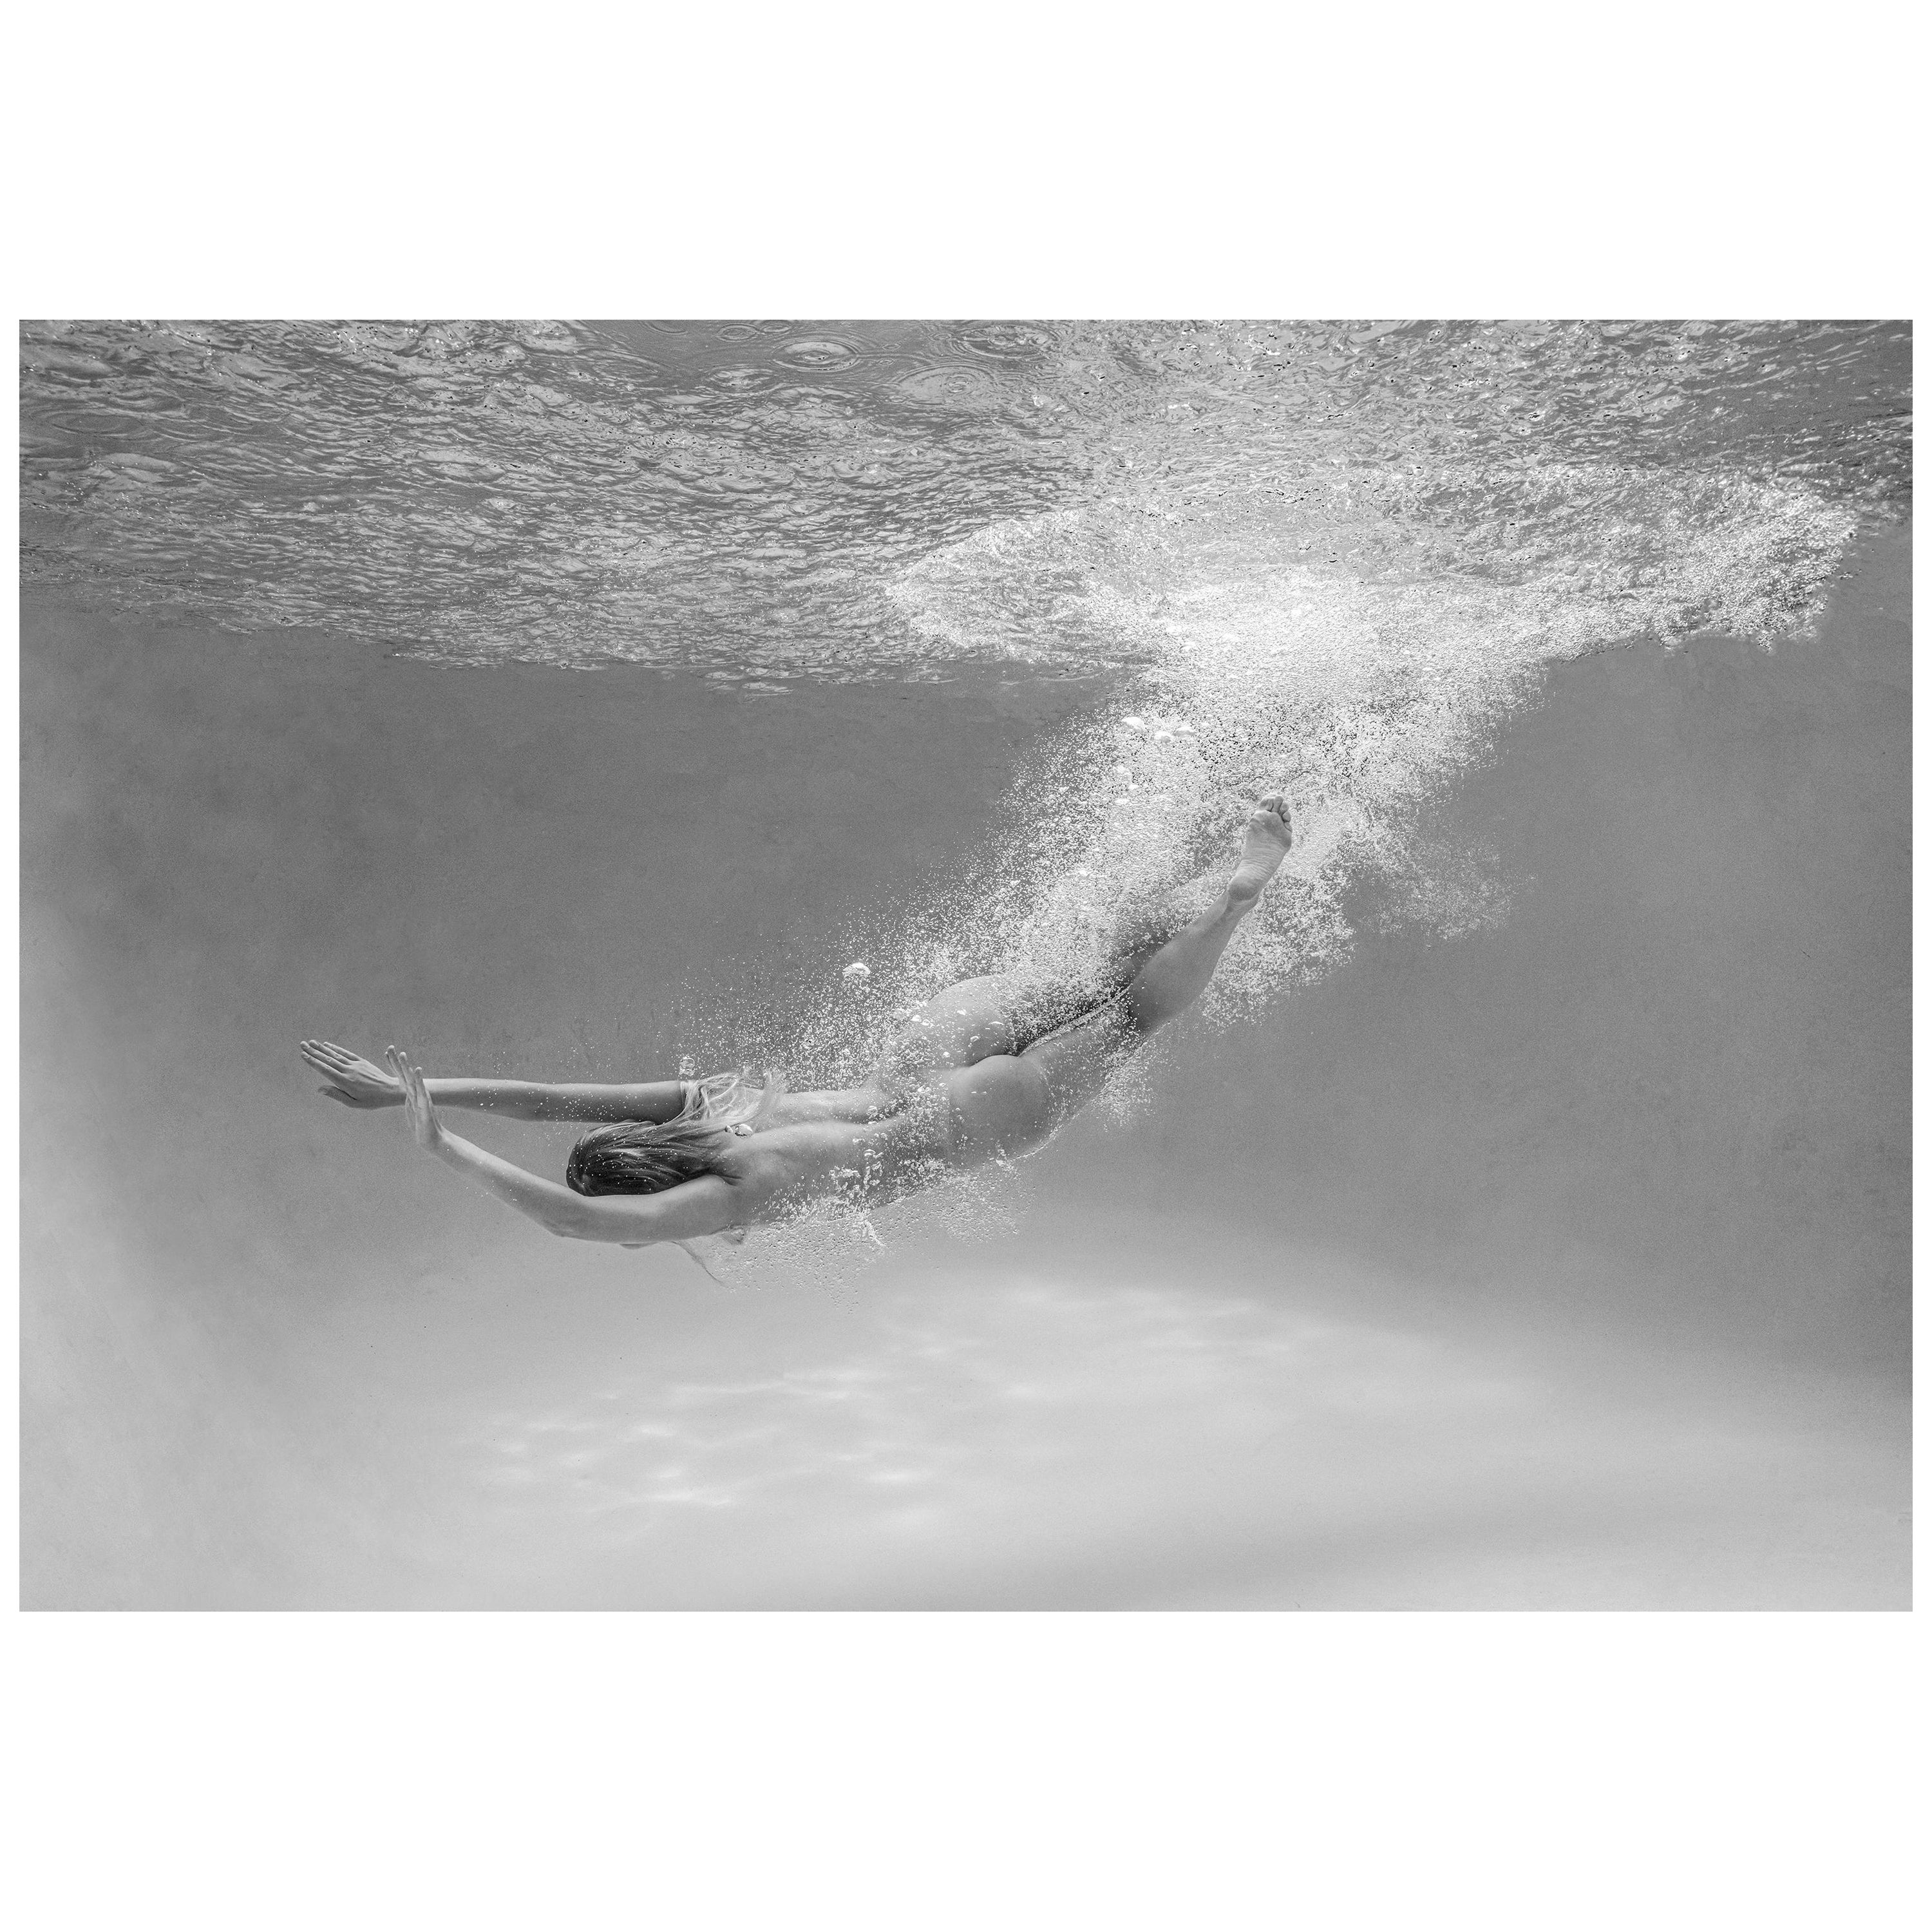 Under - underwater black & white nude photograph - print on aluminum 36x53"